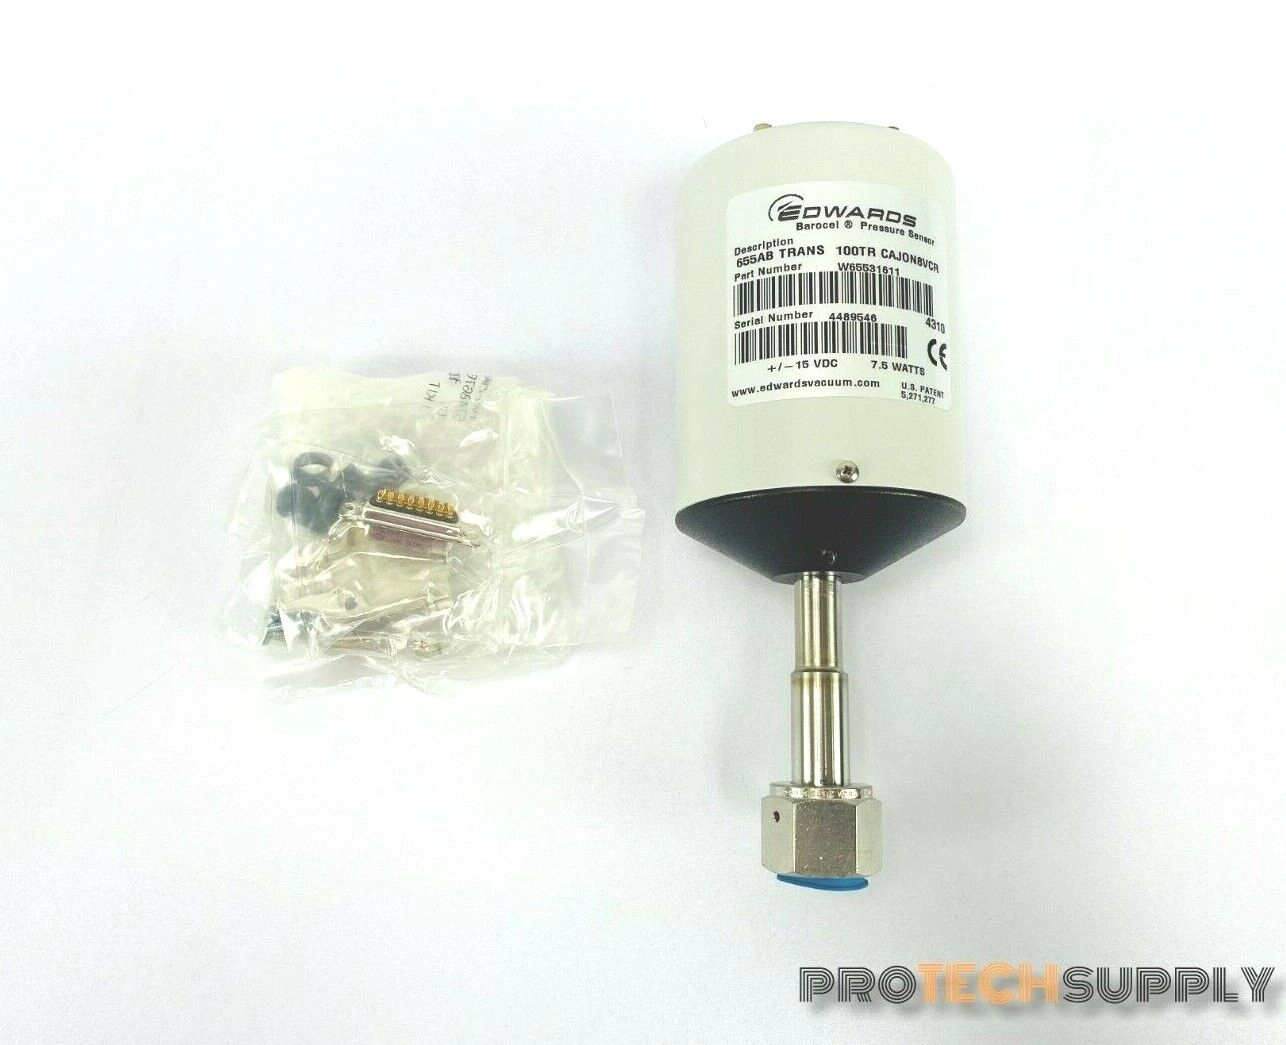 BOC Edwards W65531611 Barocel Pressure Sensor Tran